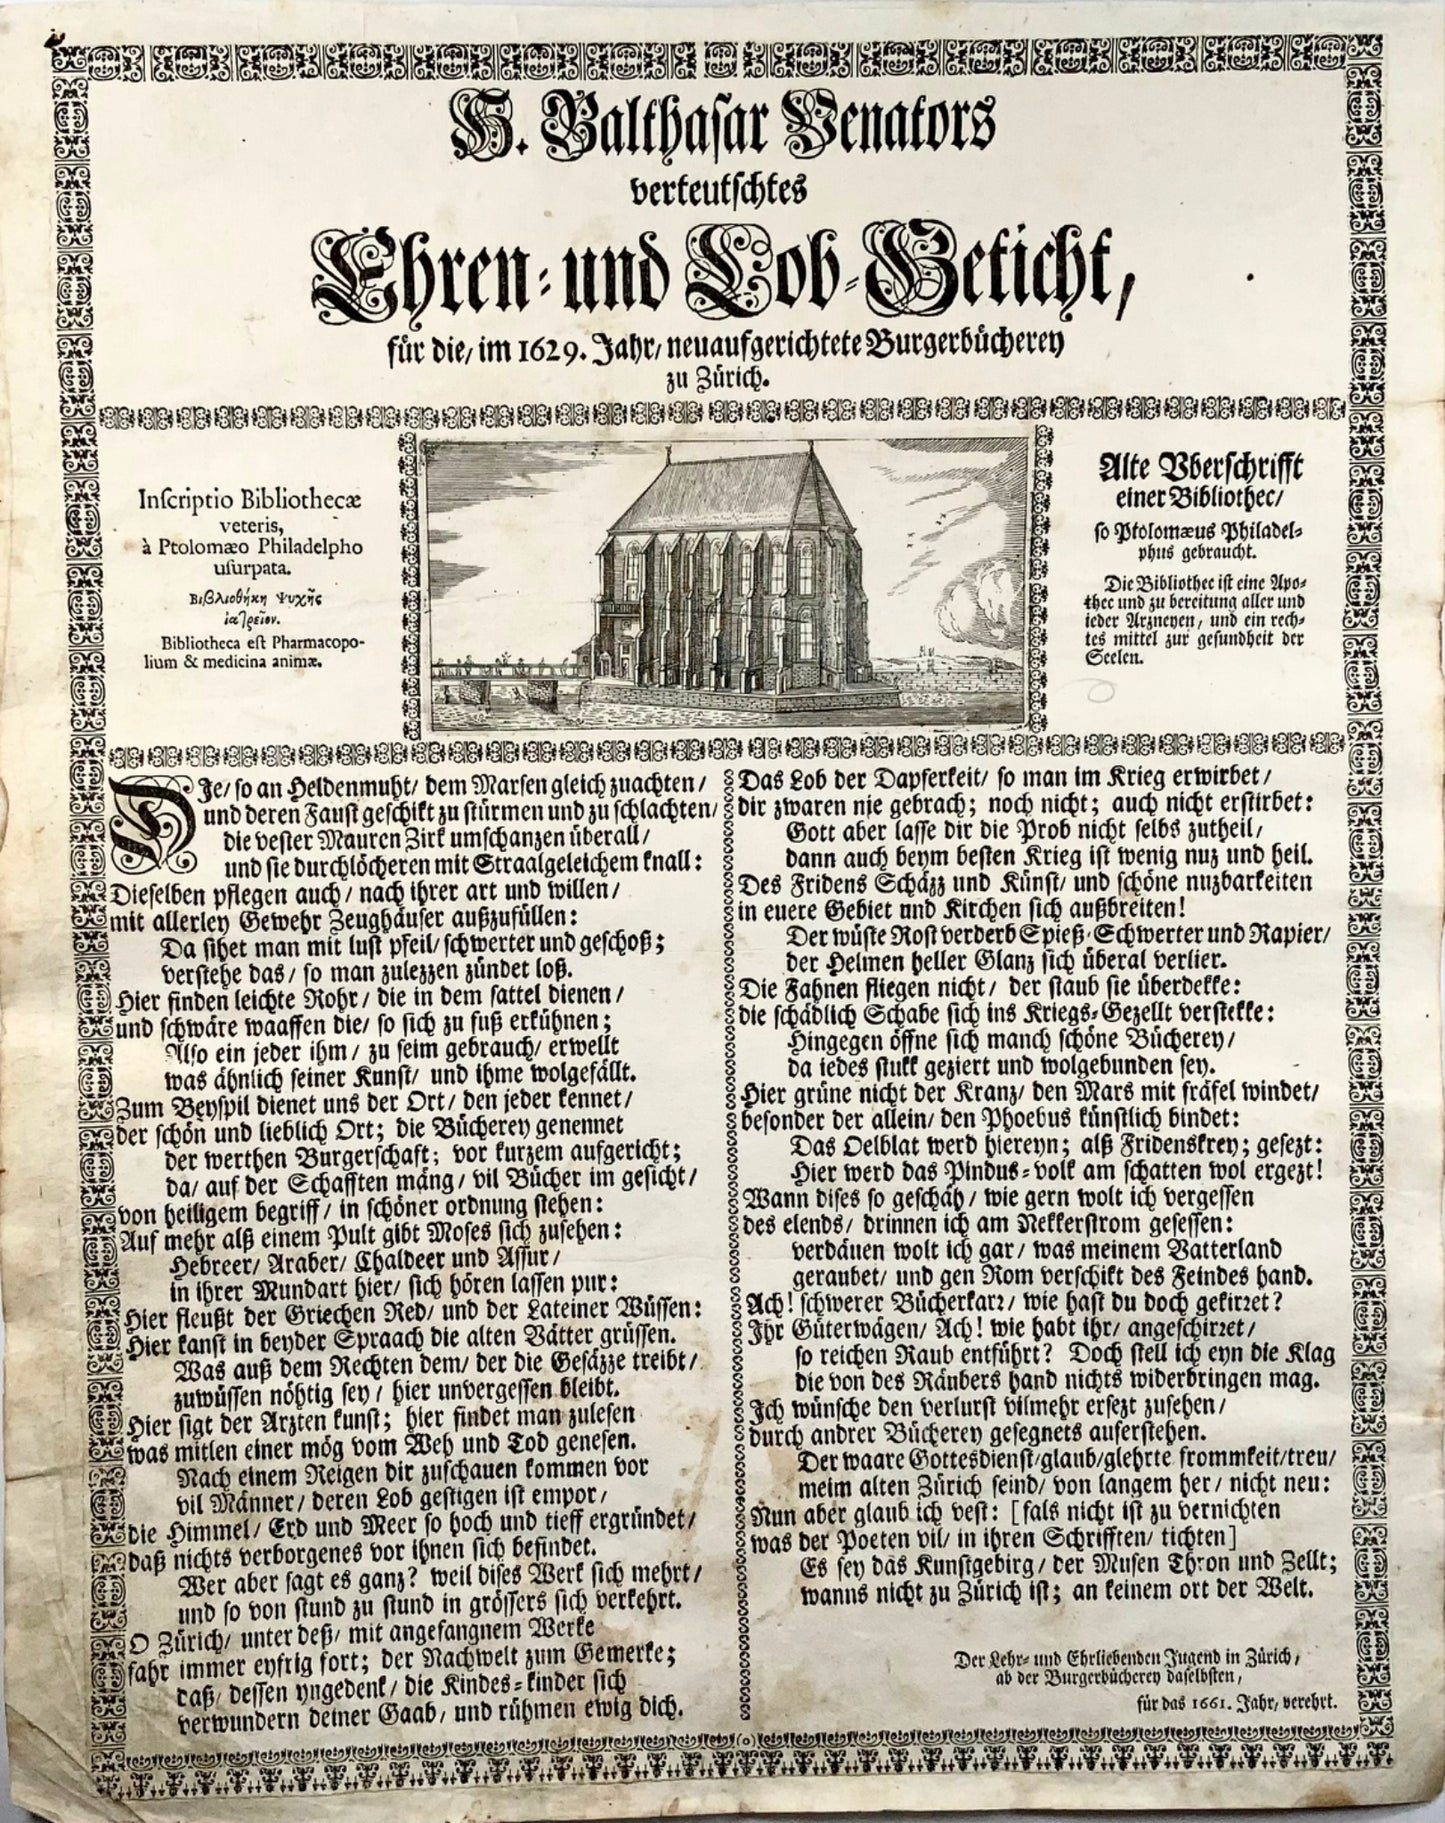 1661 Broadsheet, Ode alla Biblioteca civica, Zurigo, Svizzera, bibliotecografia